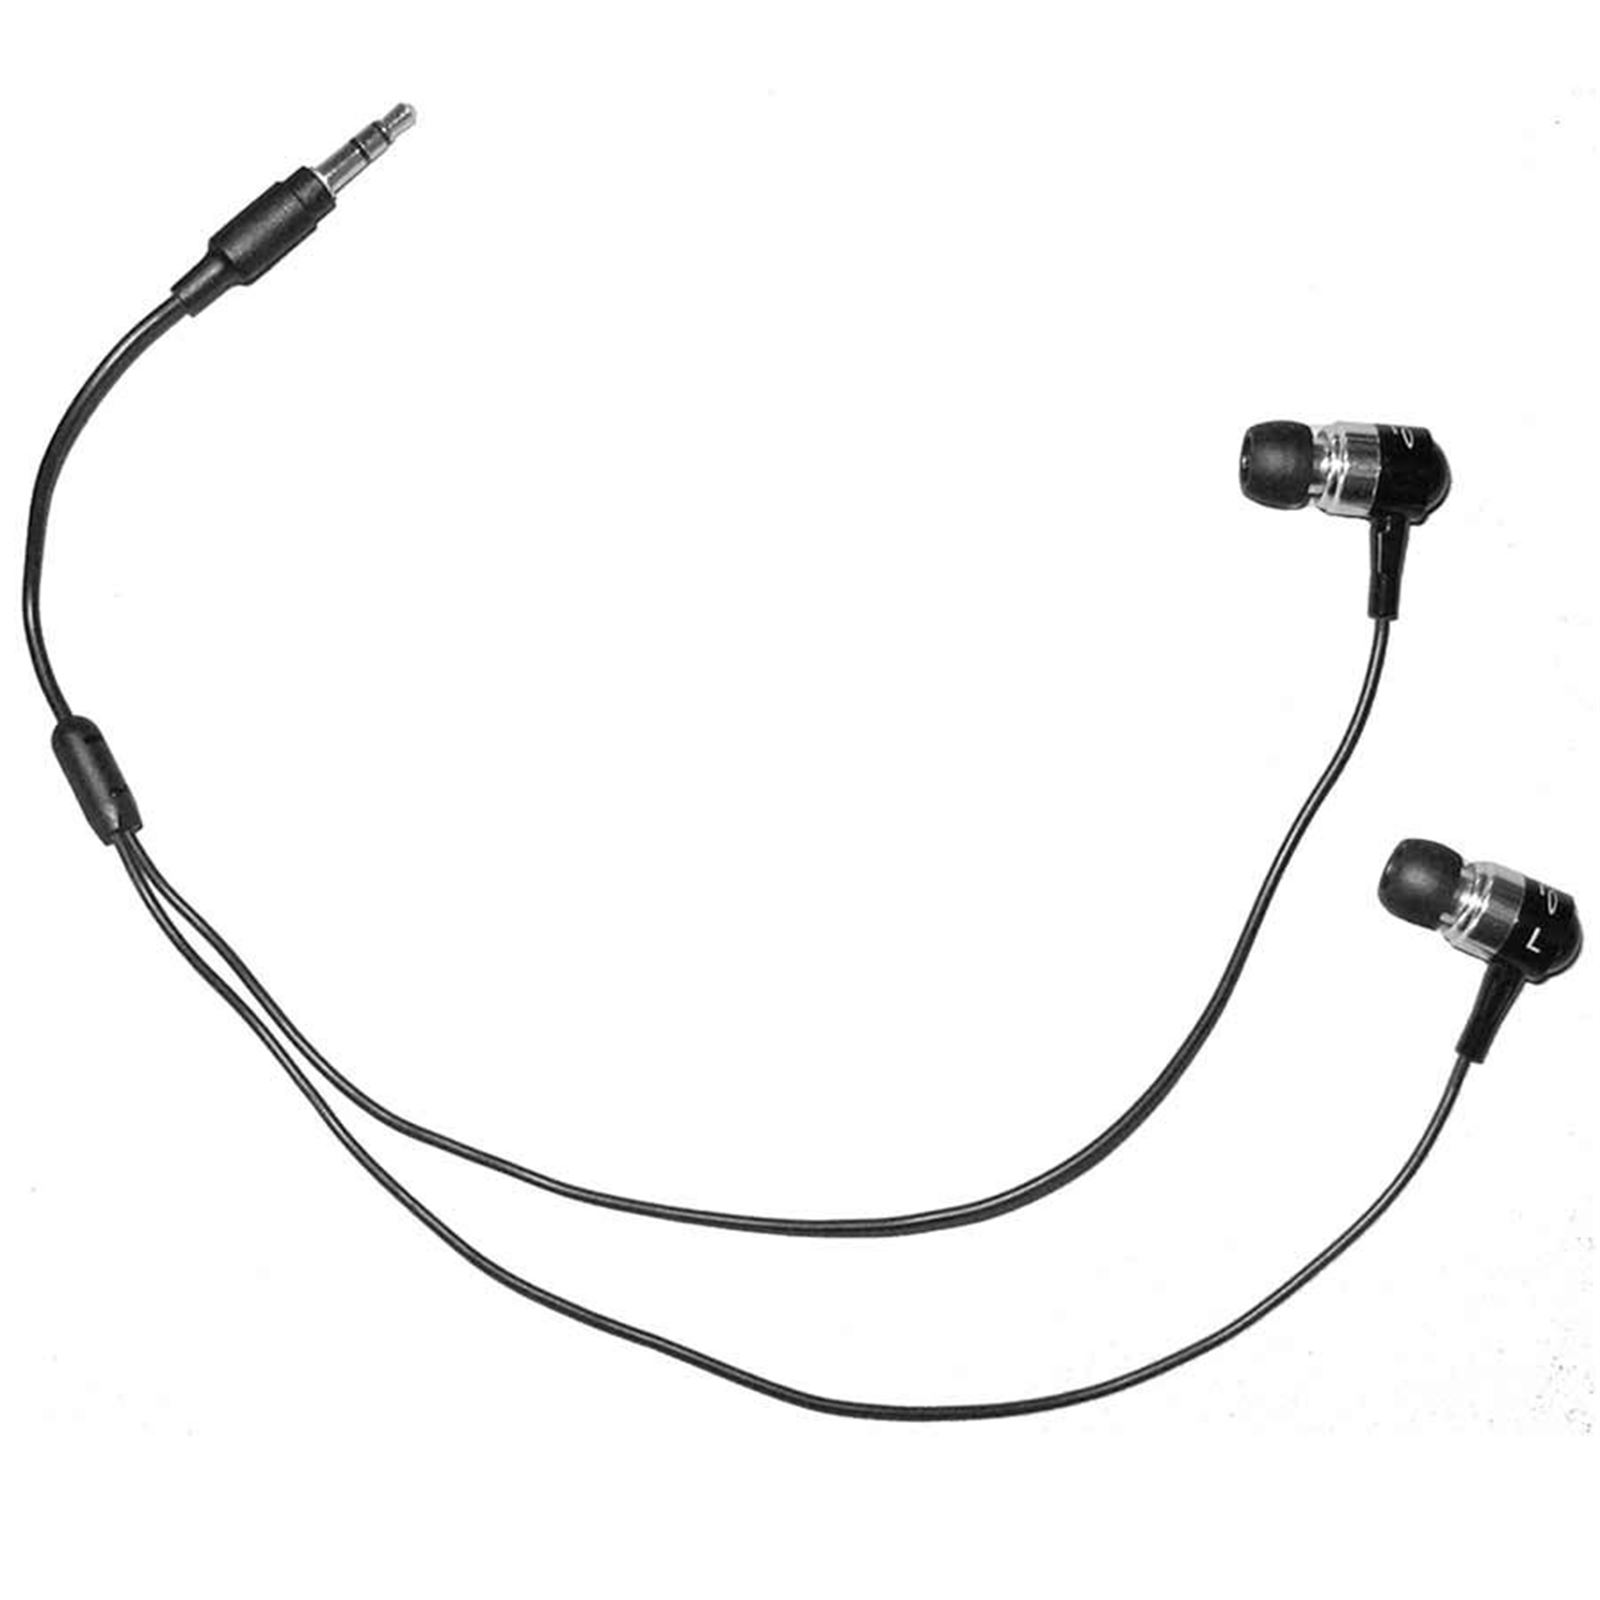 Halo Headband Rhythm Headphones